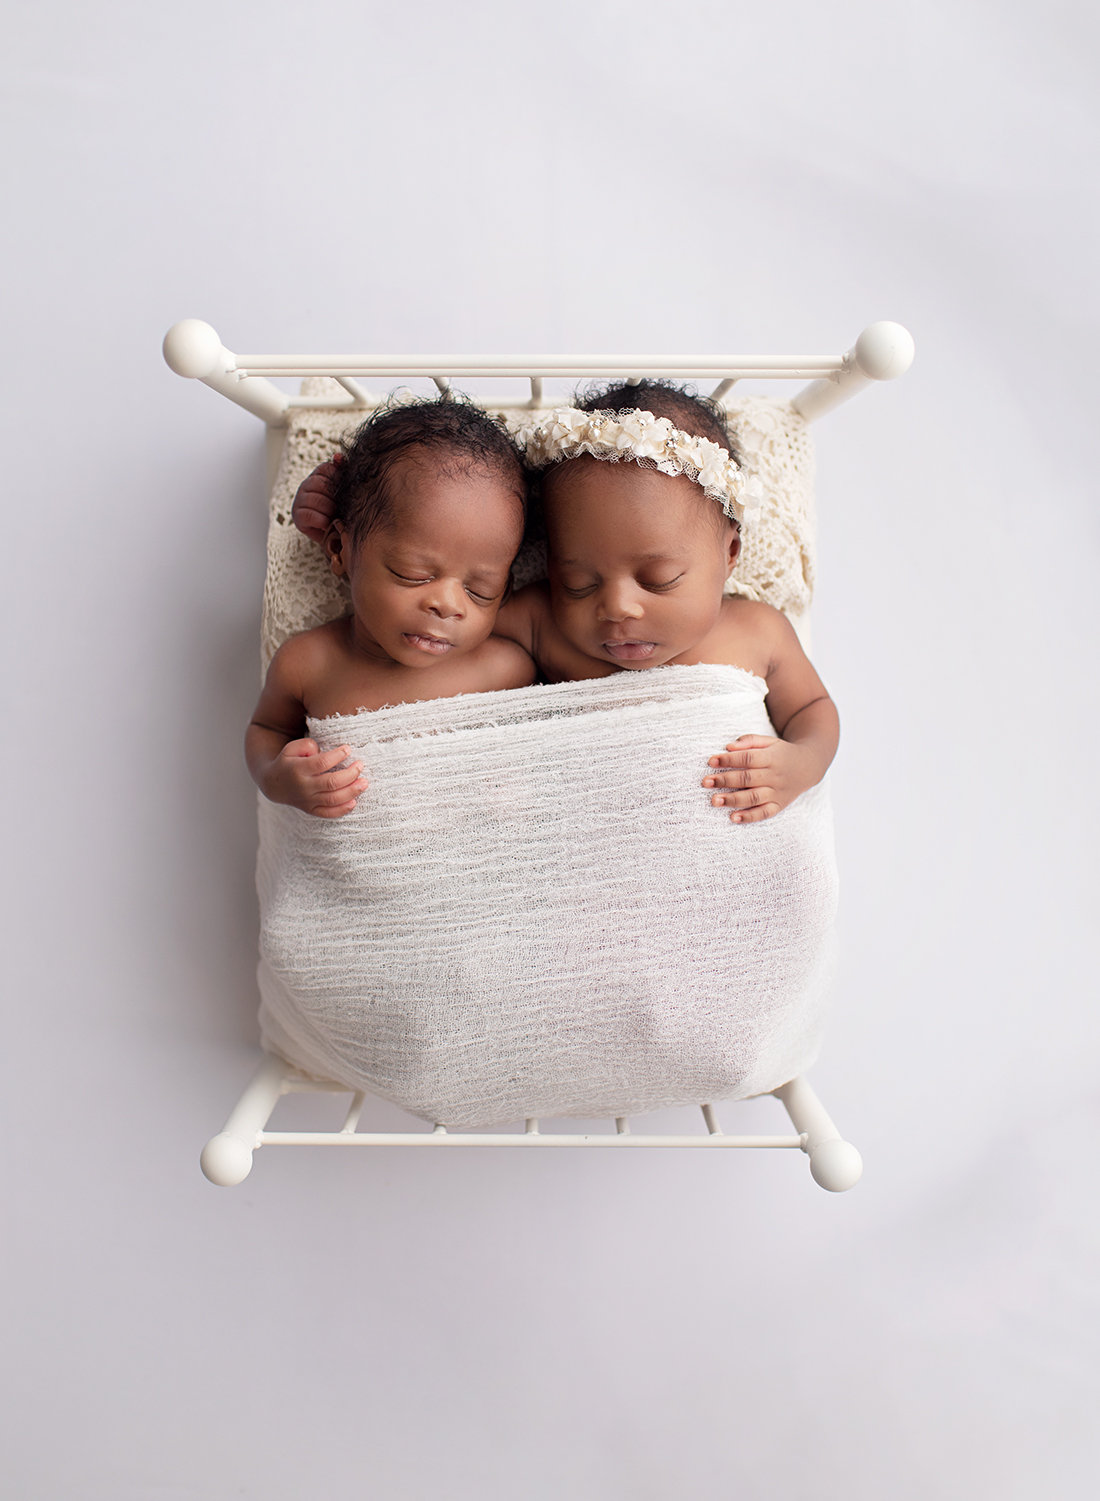 Baltimore Newborn Photographer | Mary Bosotu Photography